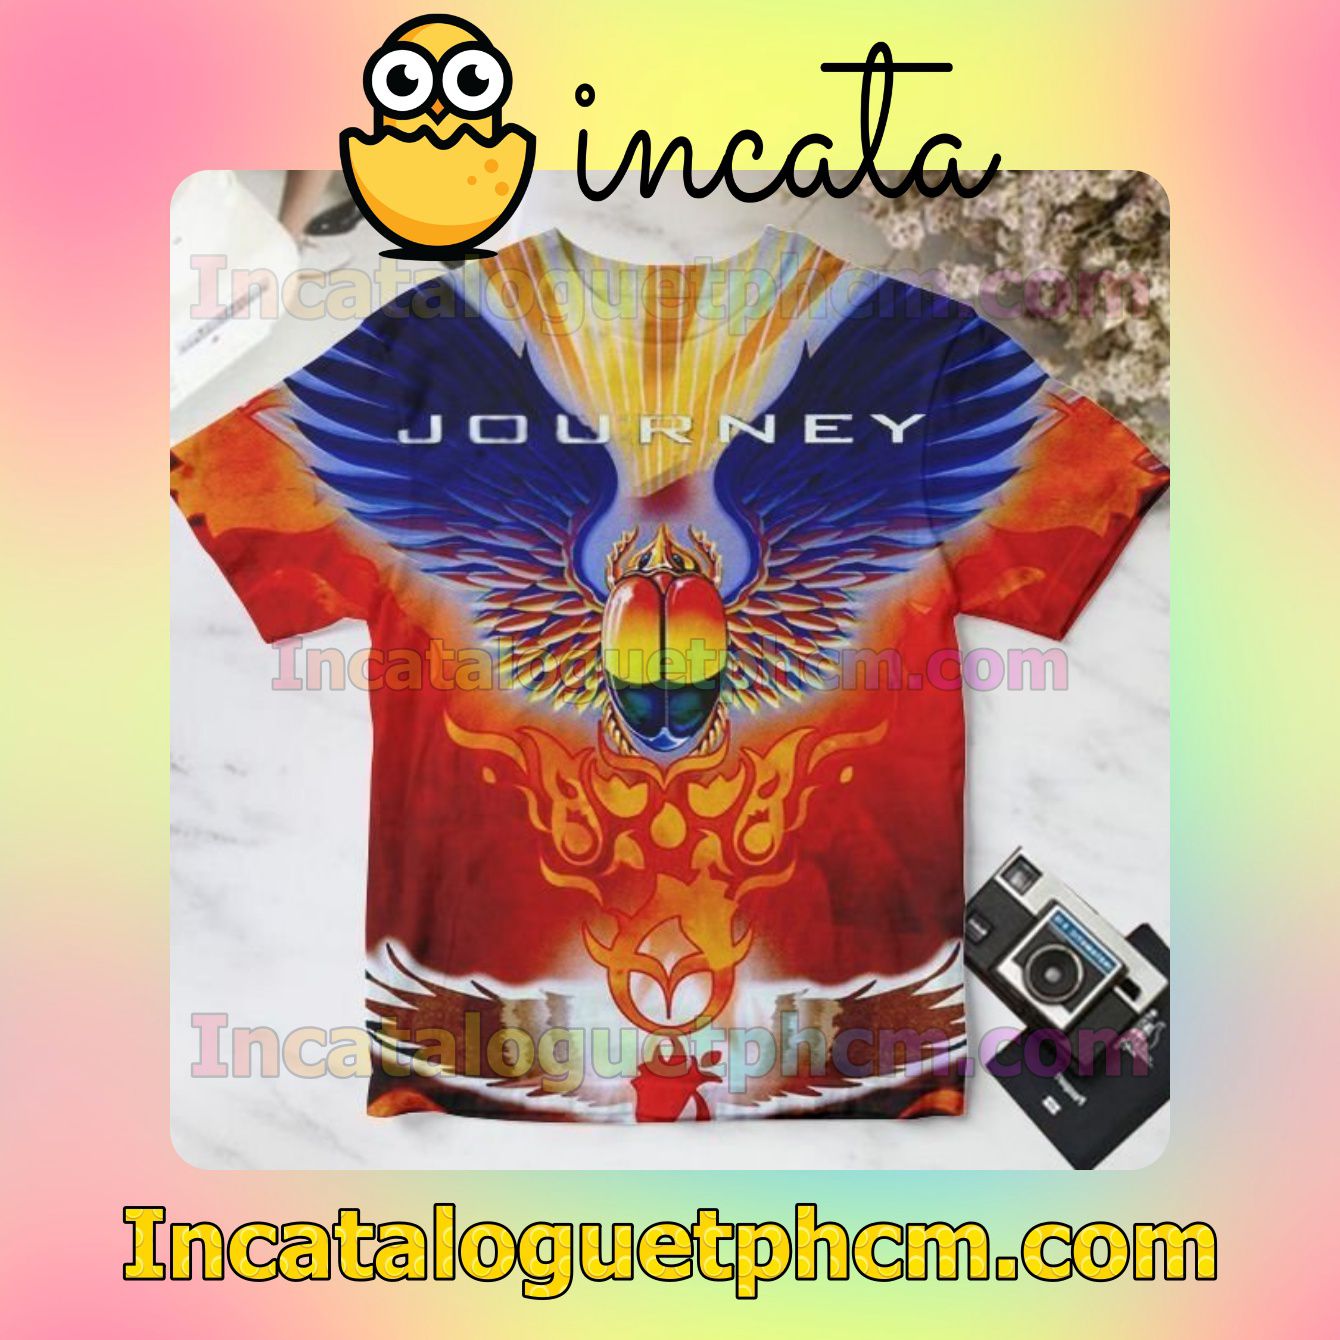 Revelation Album Cover By Journey For Fan Shirt